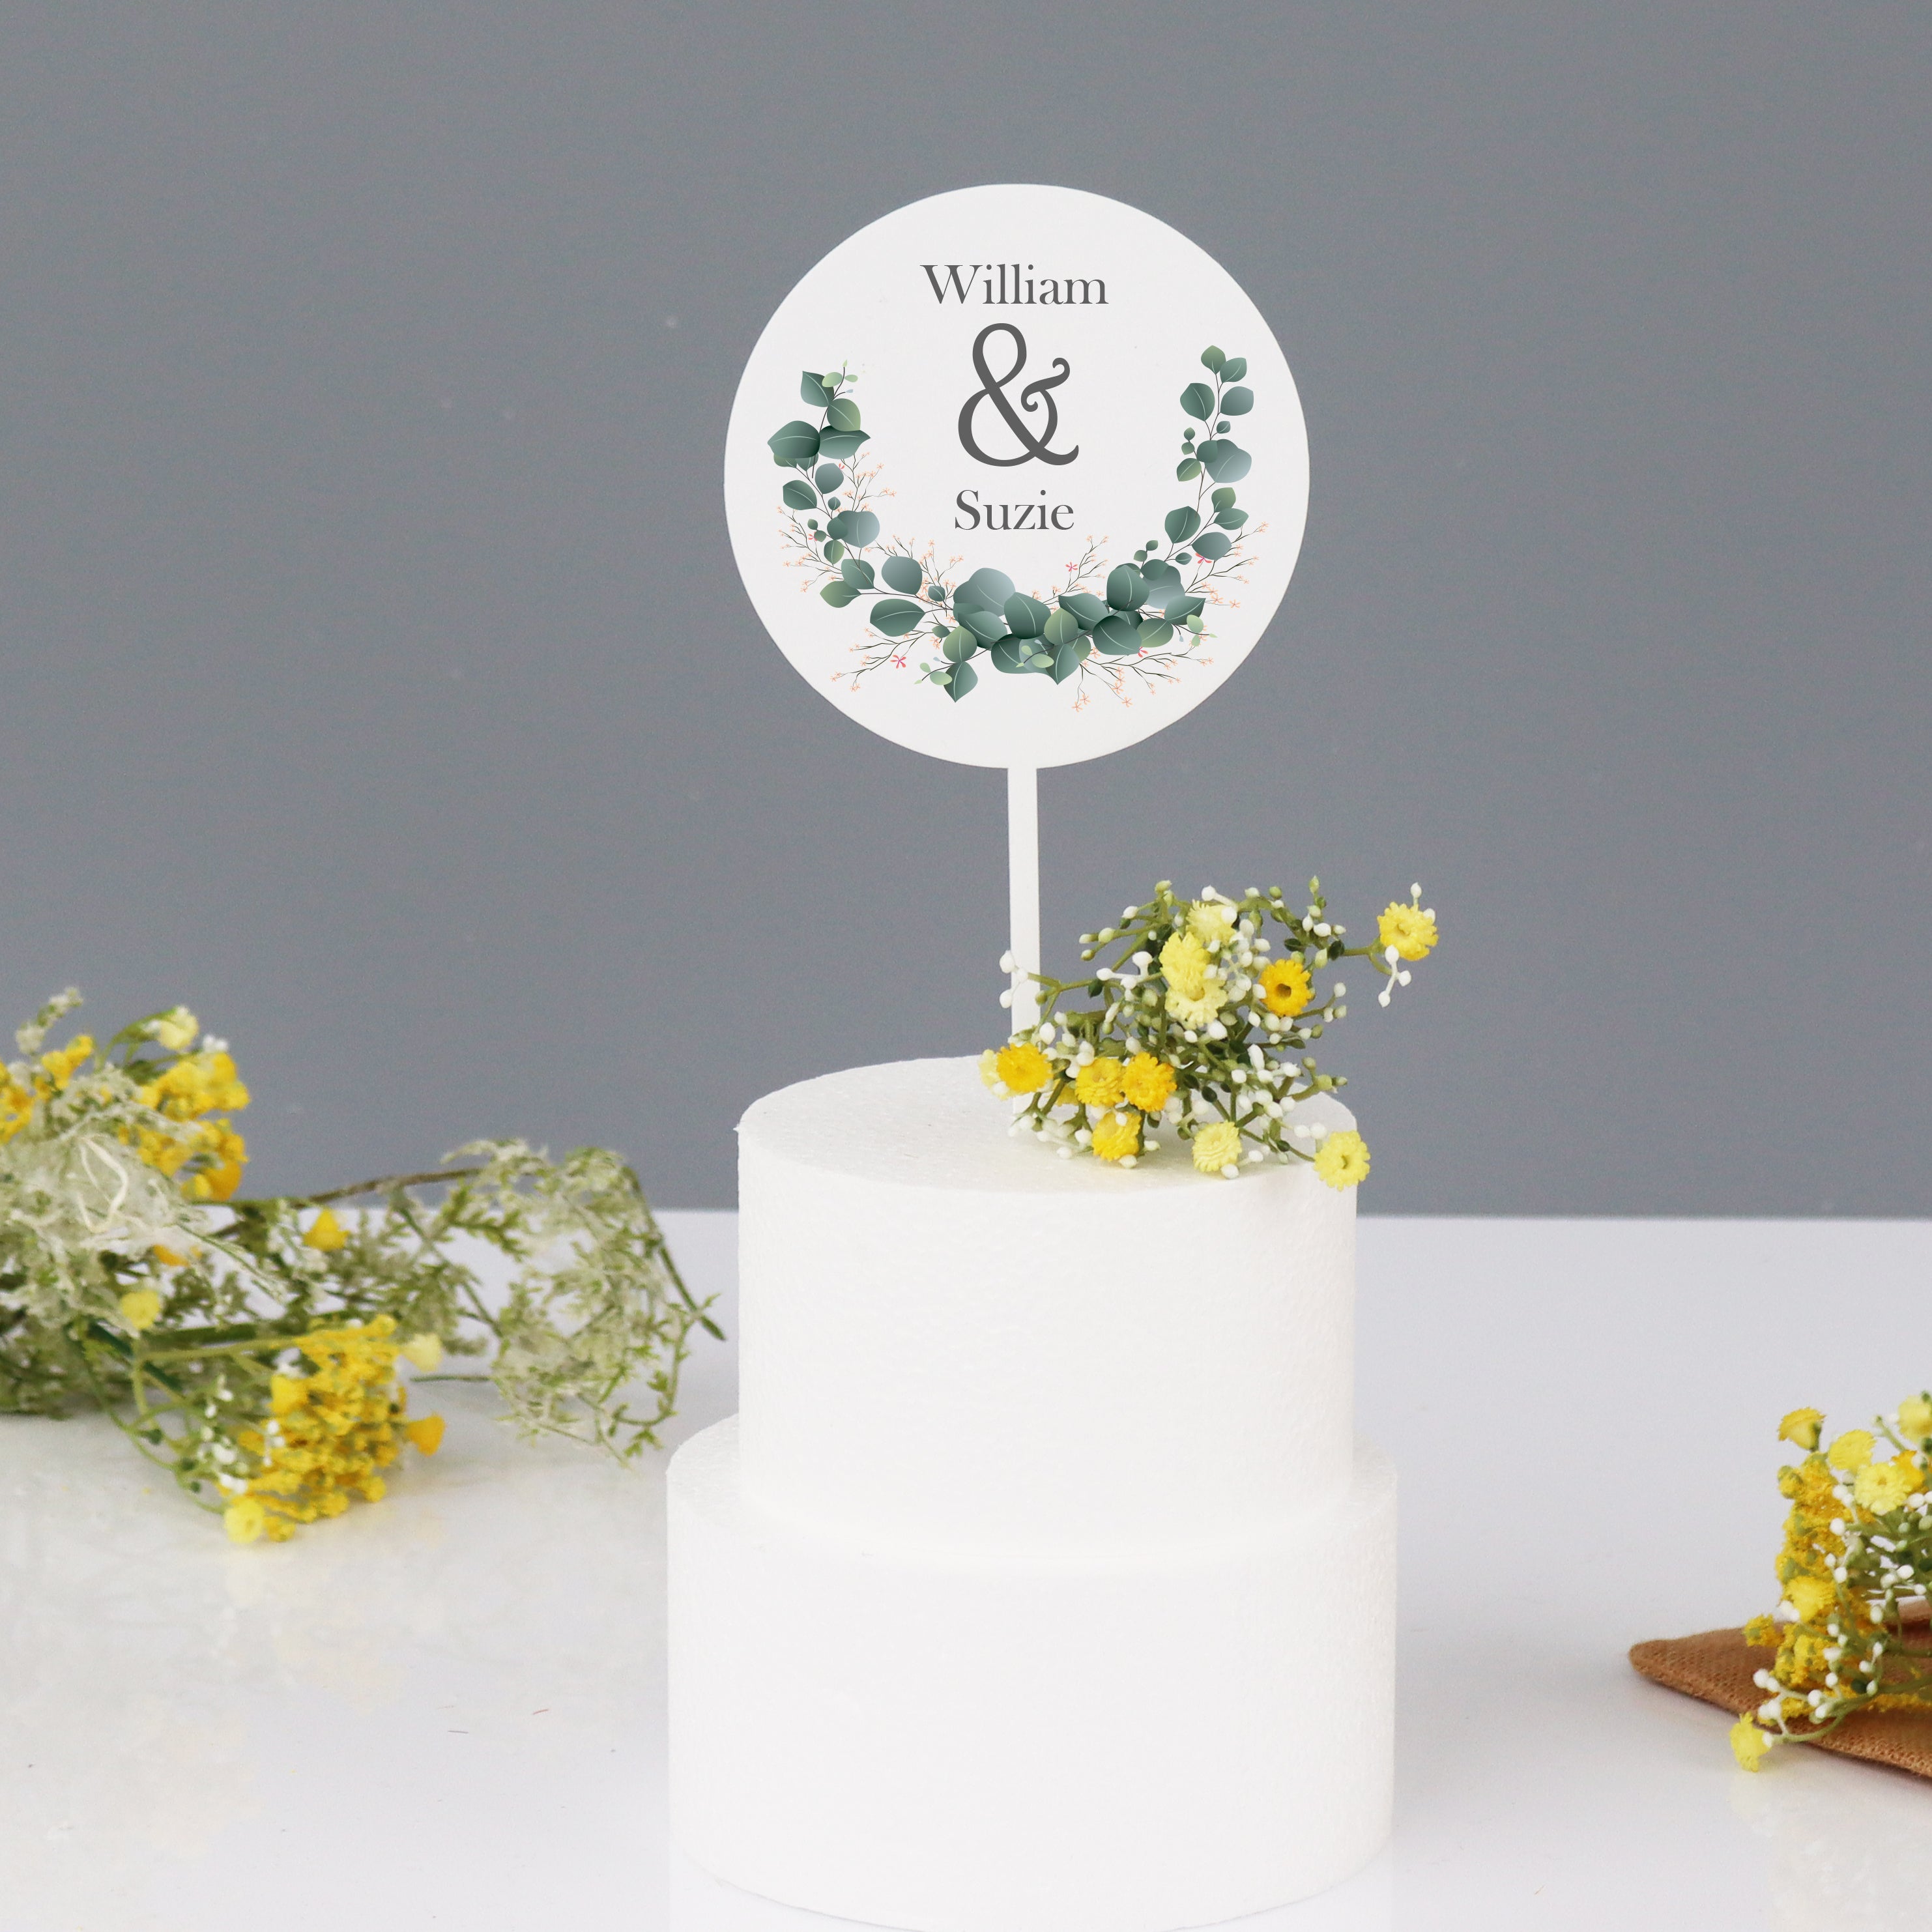 Custom Wedding Cake Topper Australia - Chain Valley Gifts